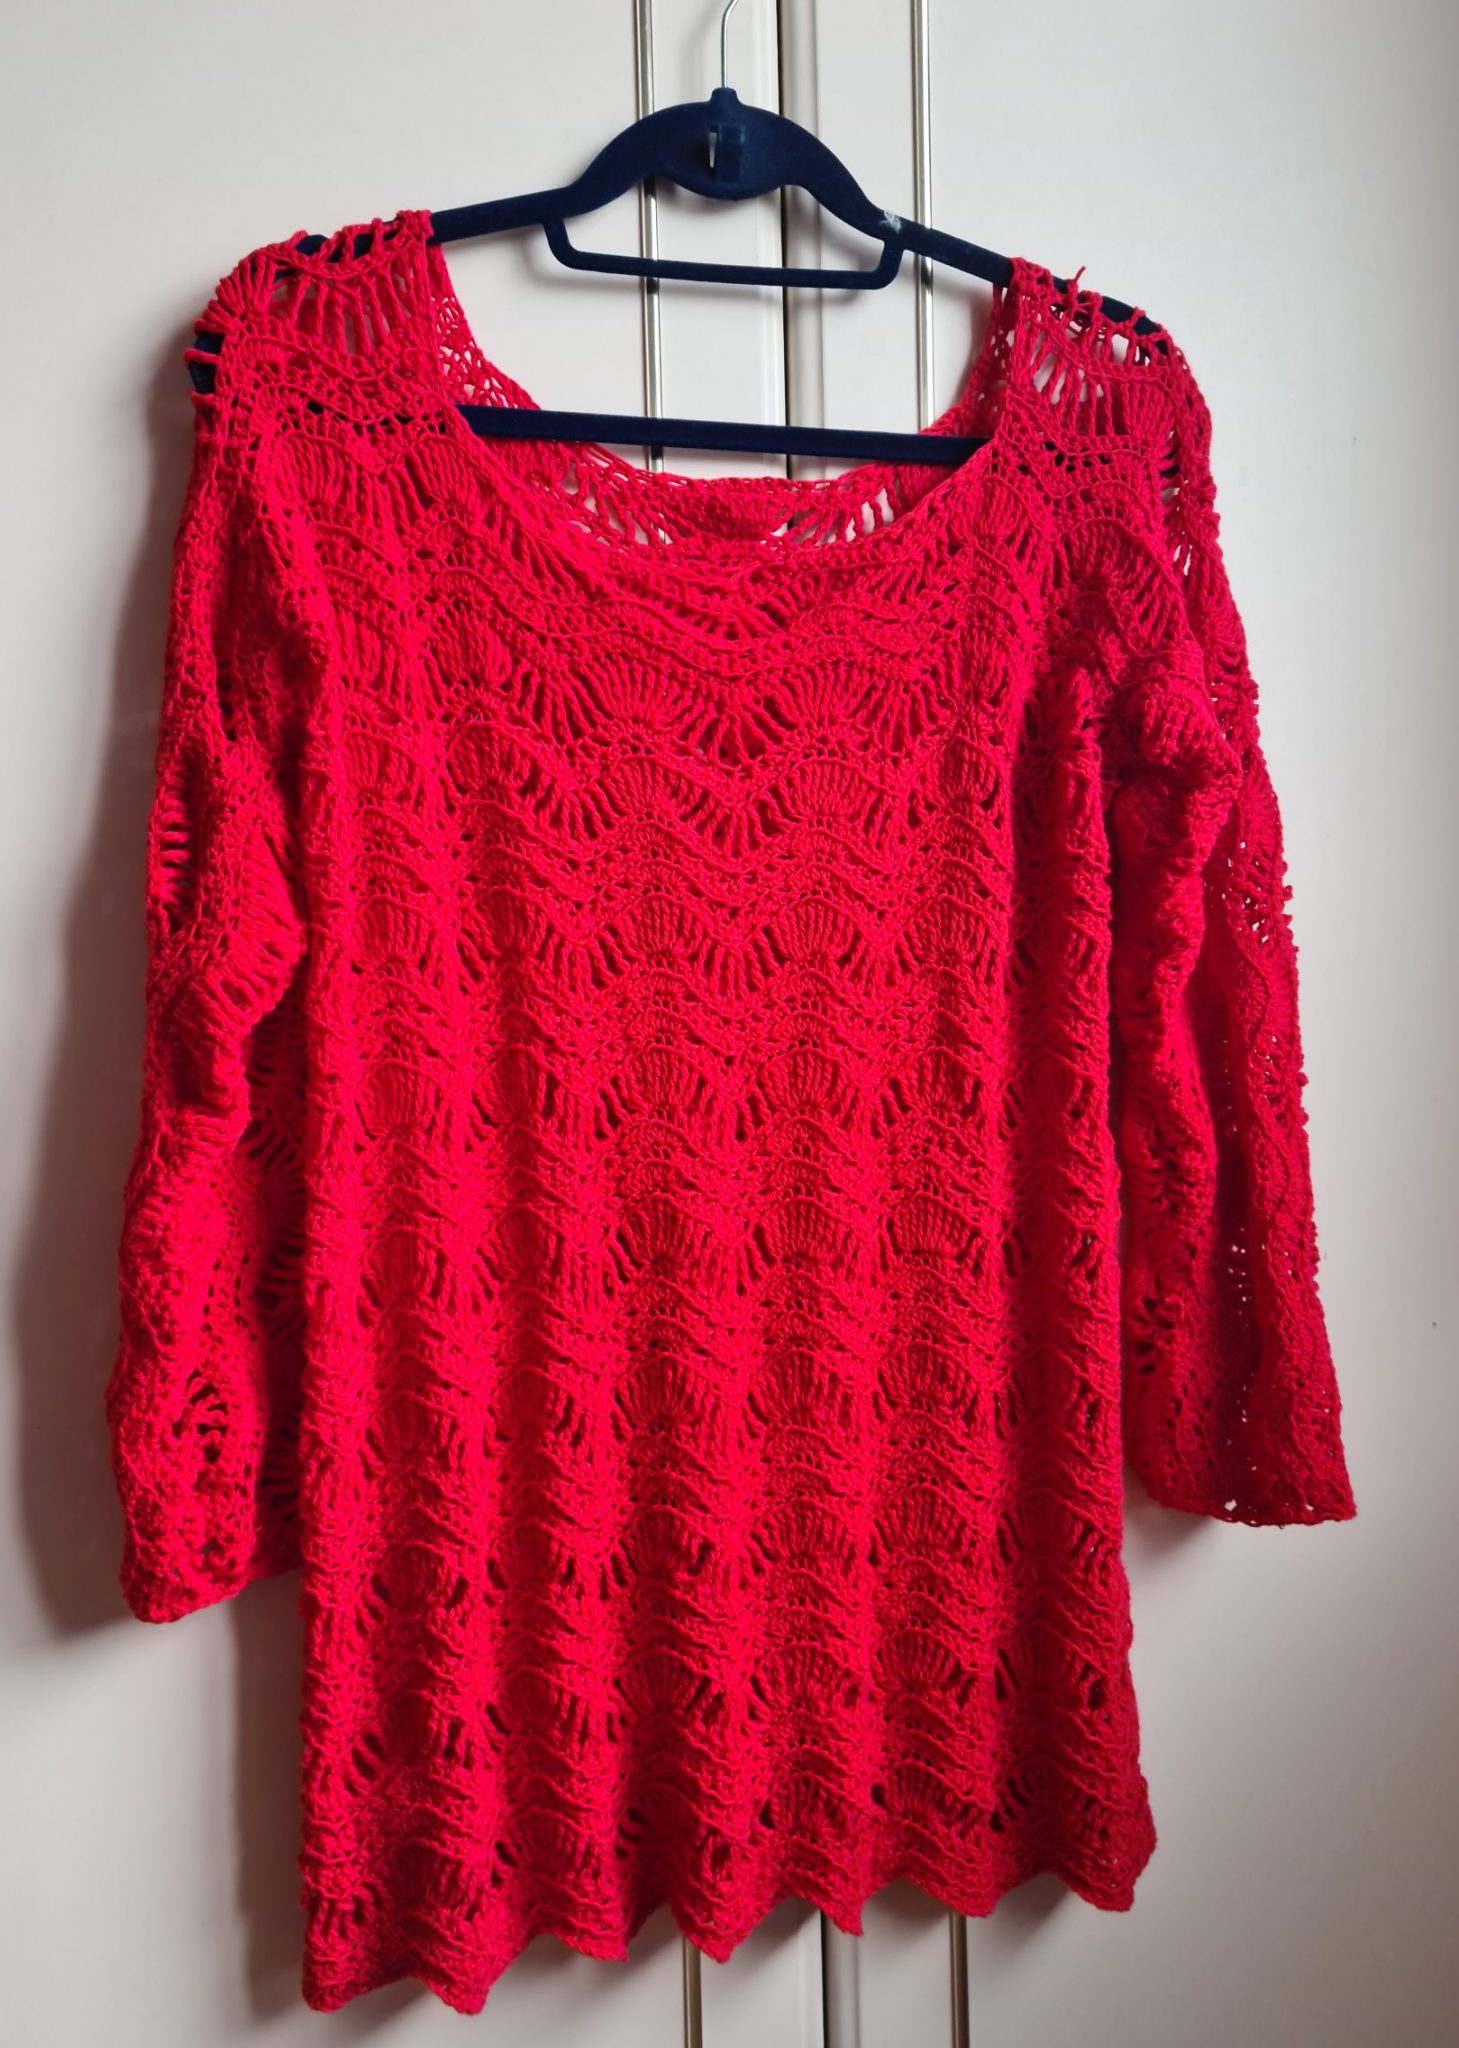 Red Crochet Top l Triggerfish Crochet l Cotton yarn